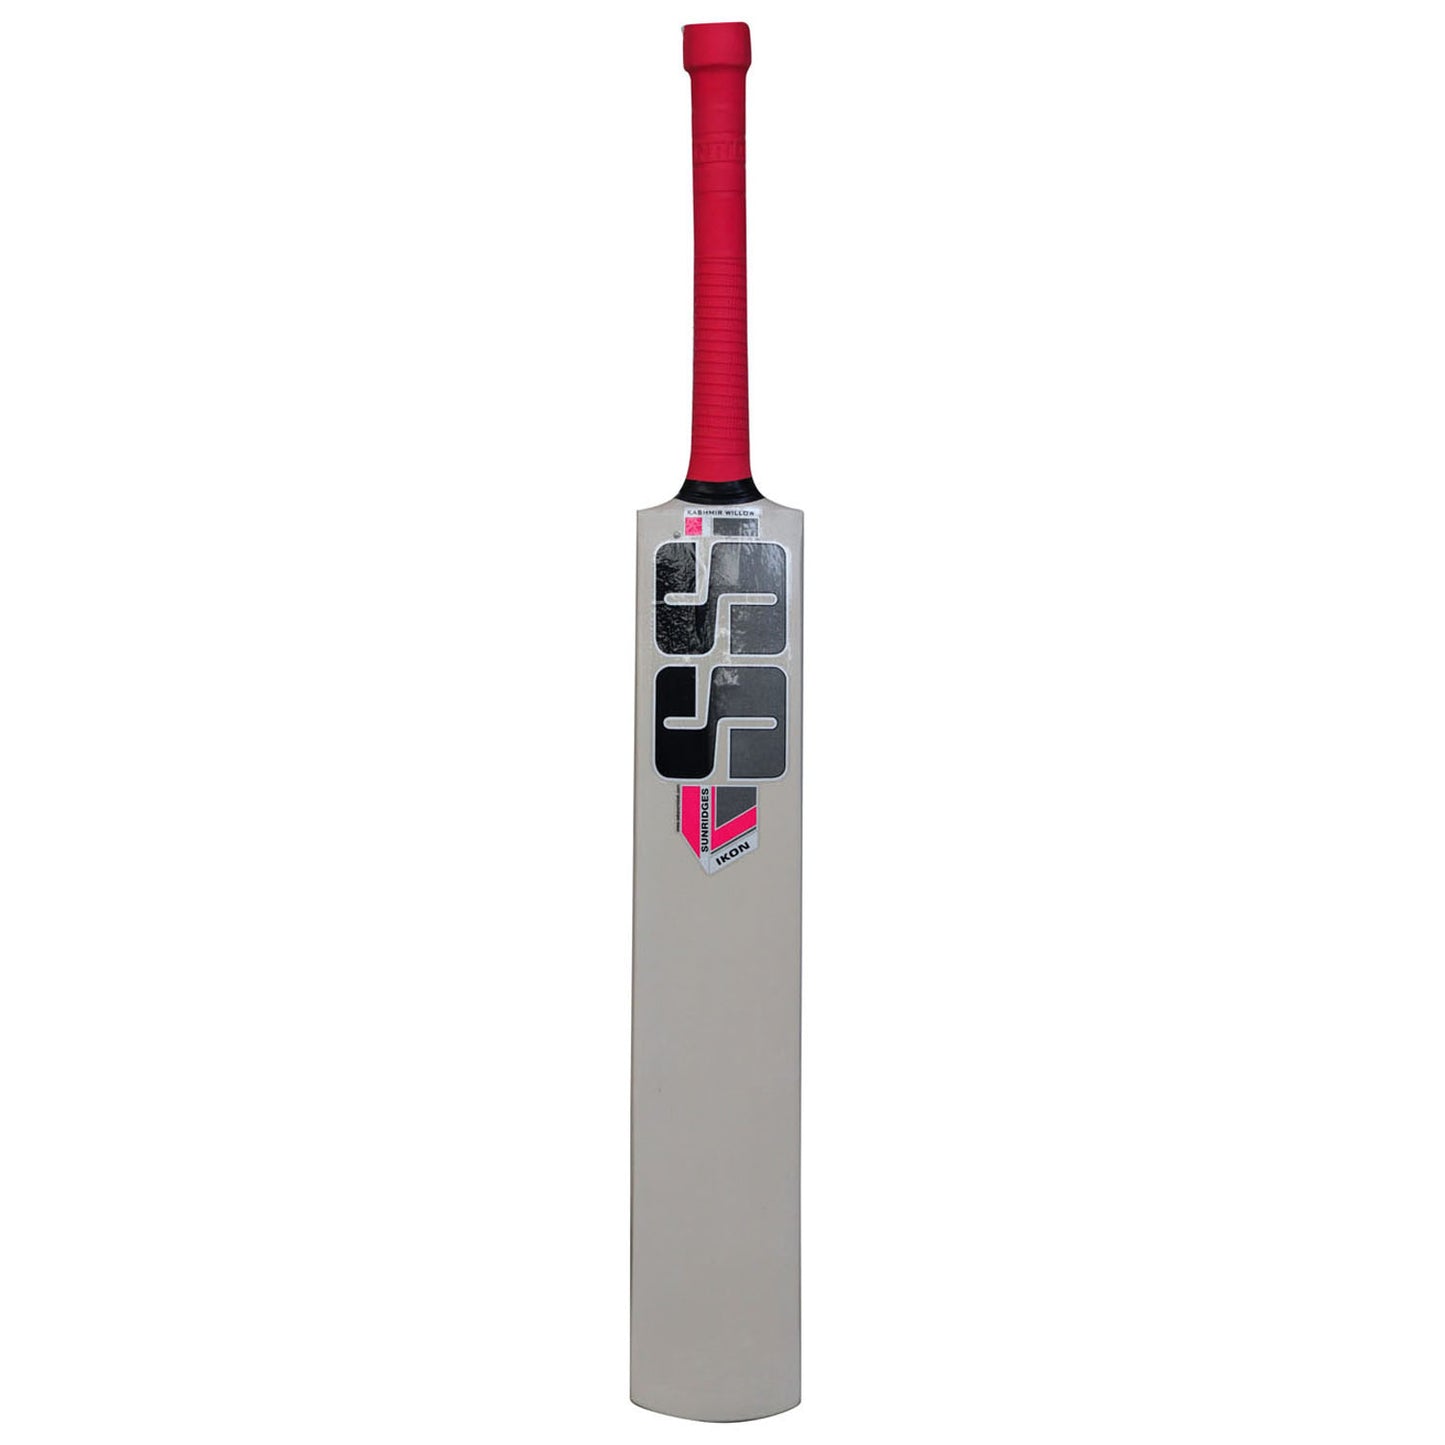 SS Ikon Kashmir Willow Cricket Bat - Best Price online Prokicksports.com